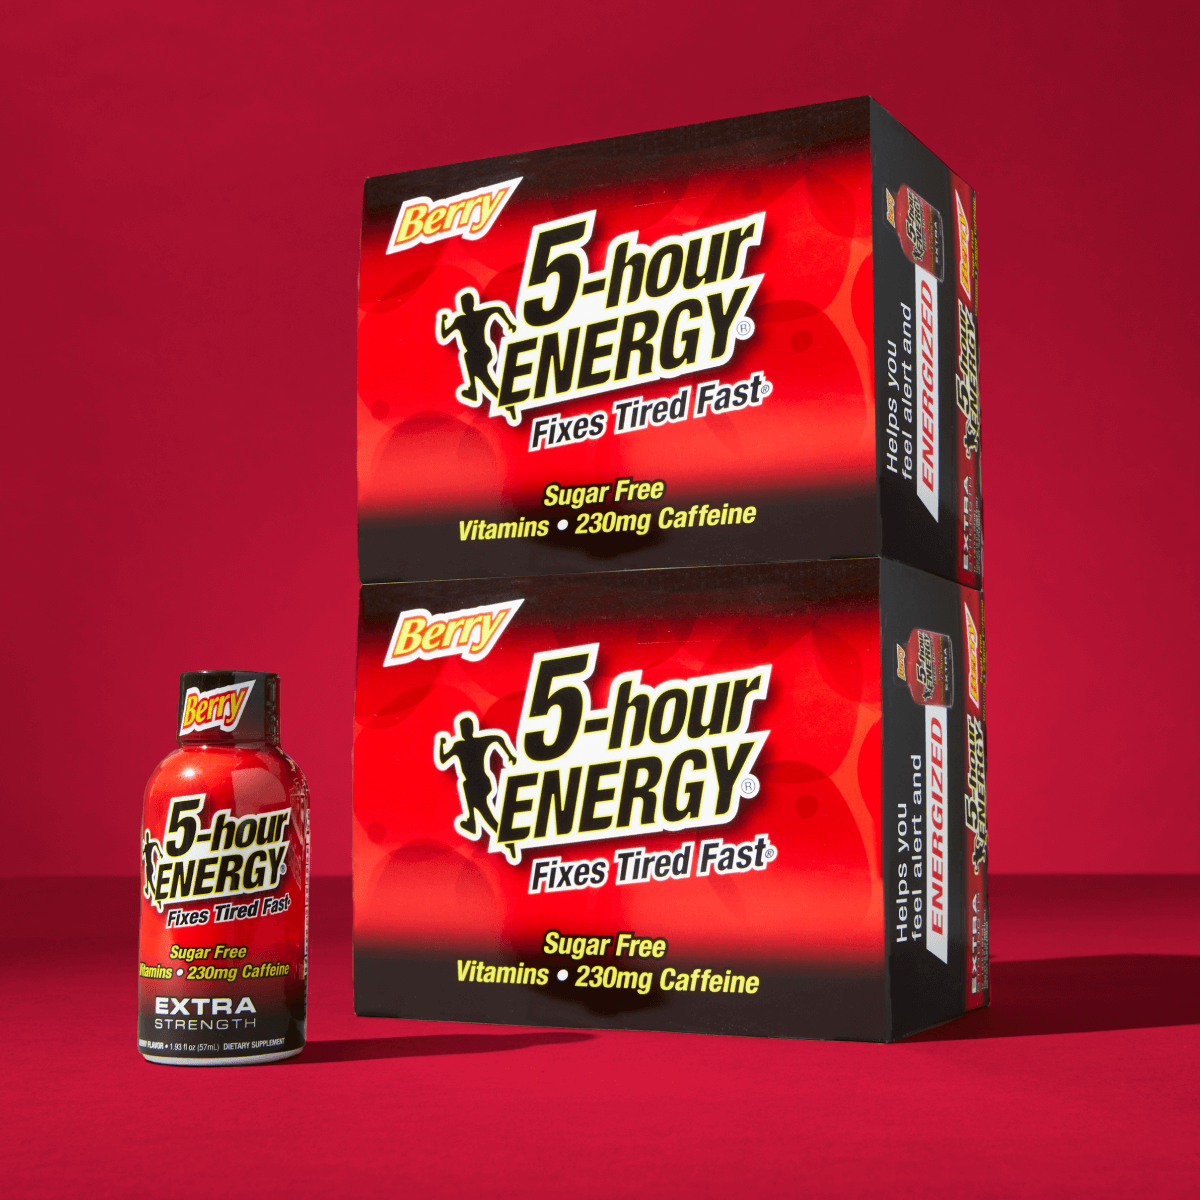 Extra Strength Berry 5-hour ENERGY shot boxes